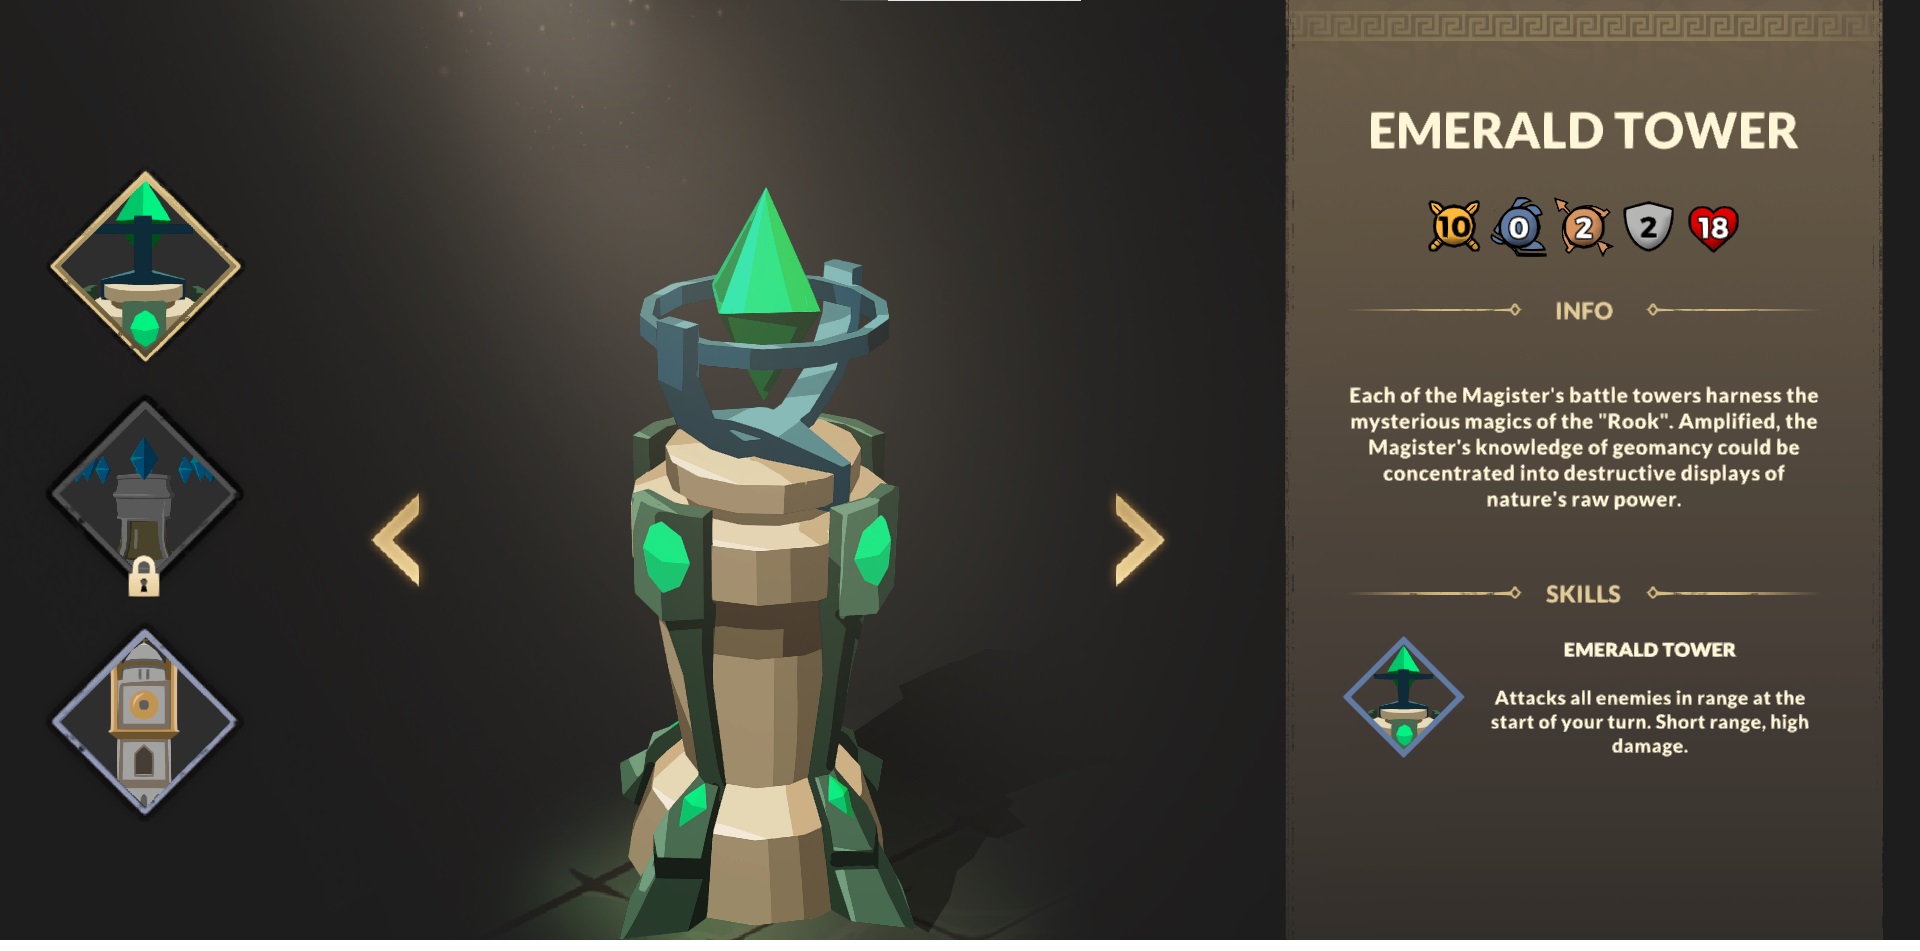 Emerald tower